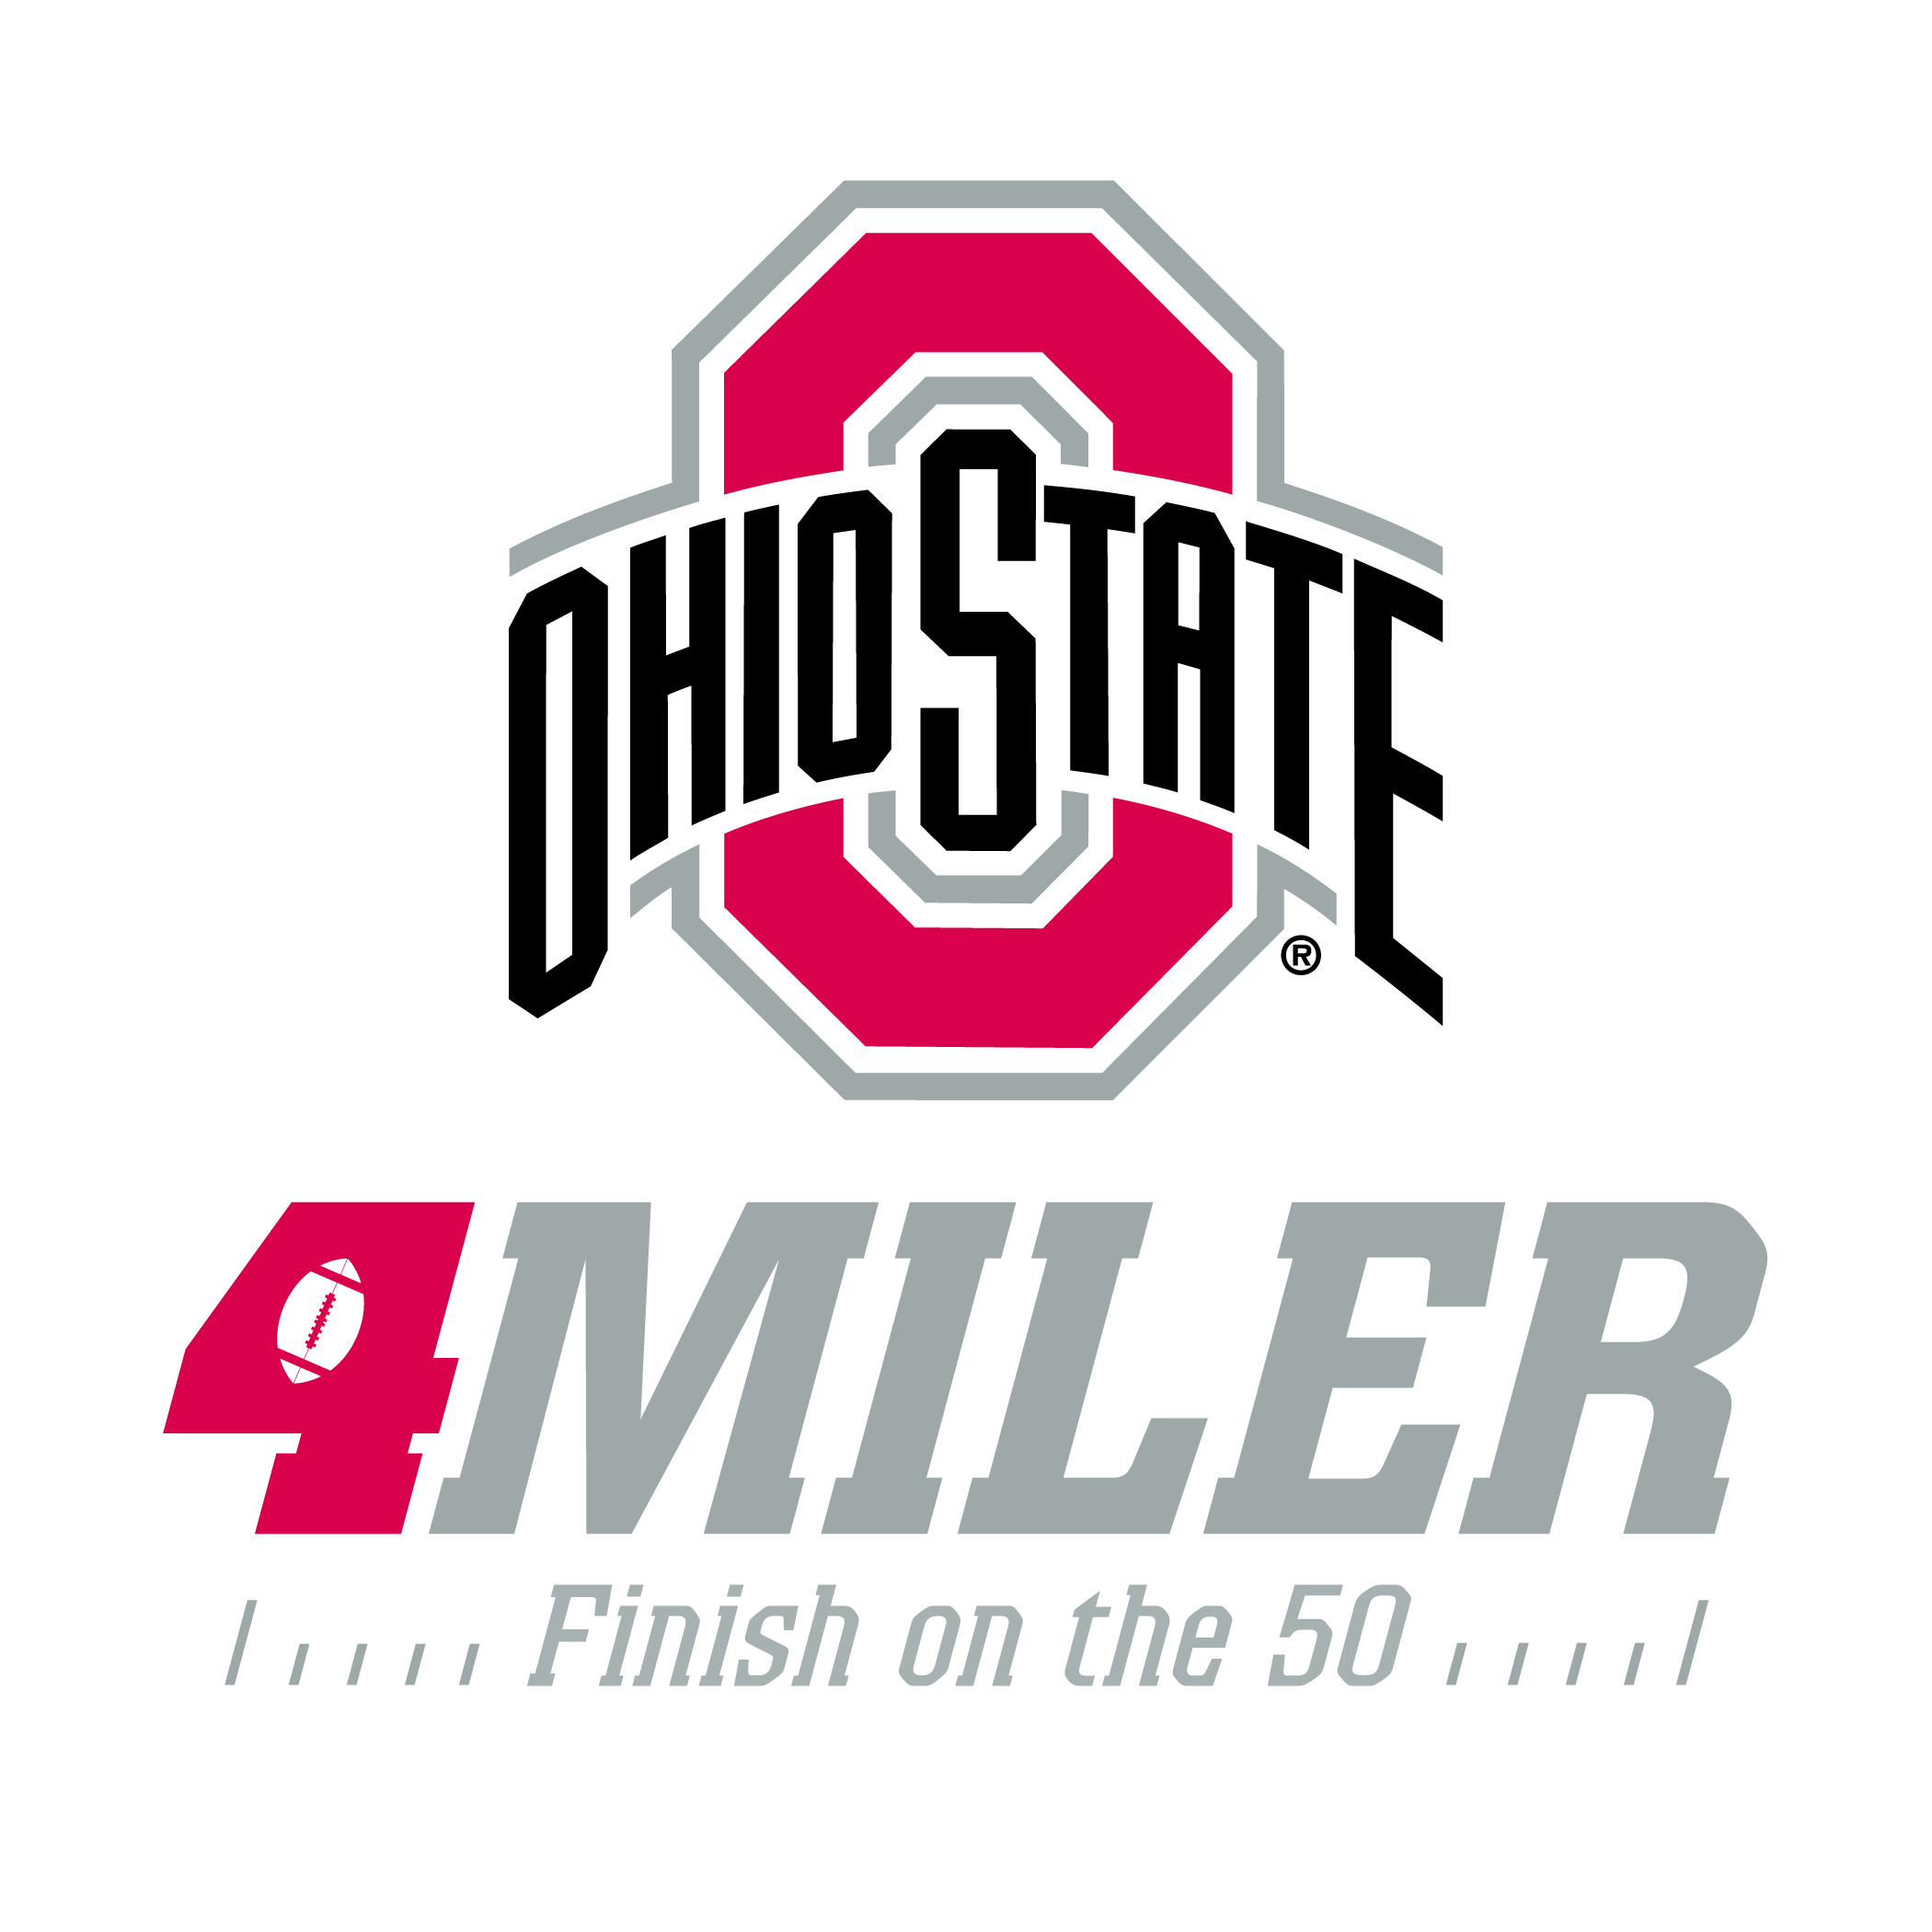 The Ohio State 4 Miler logo